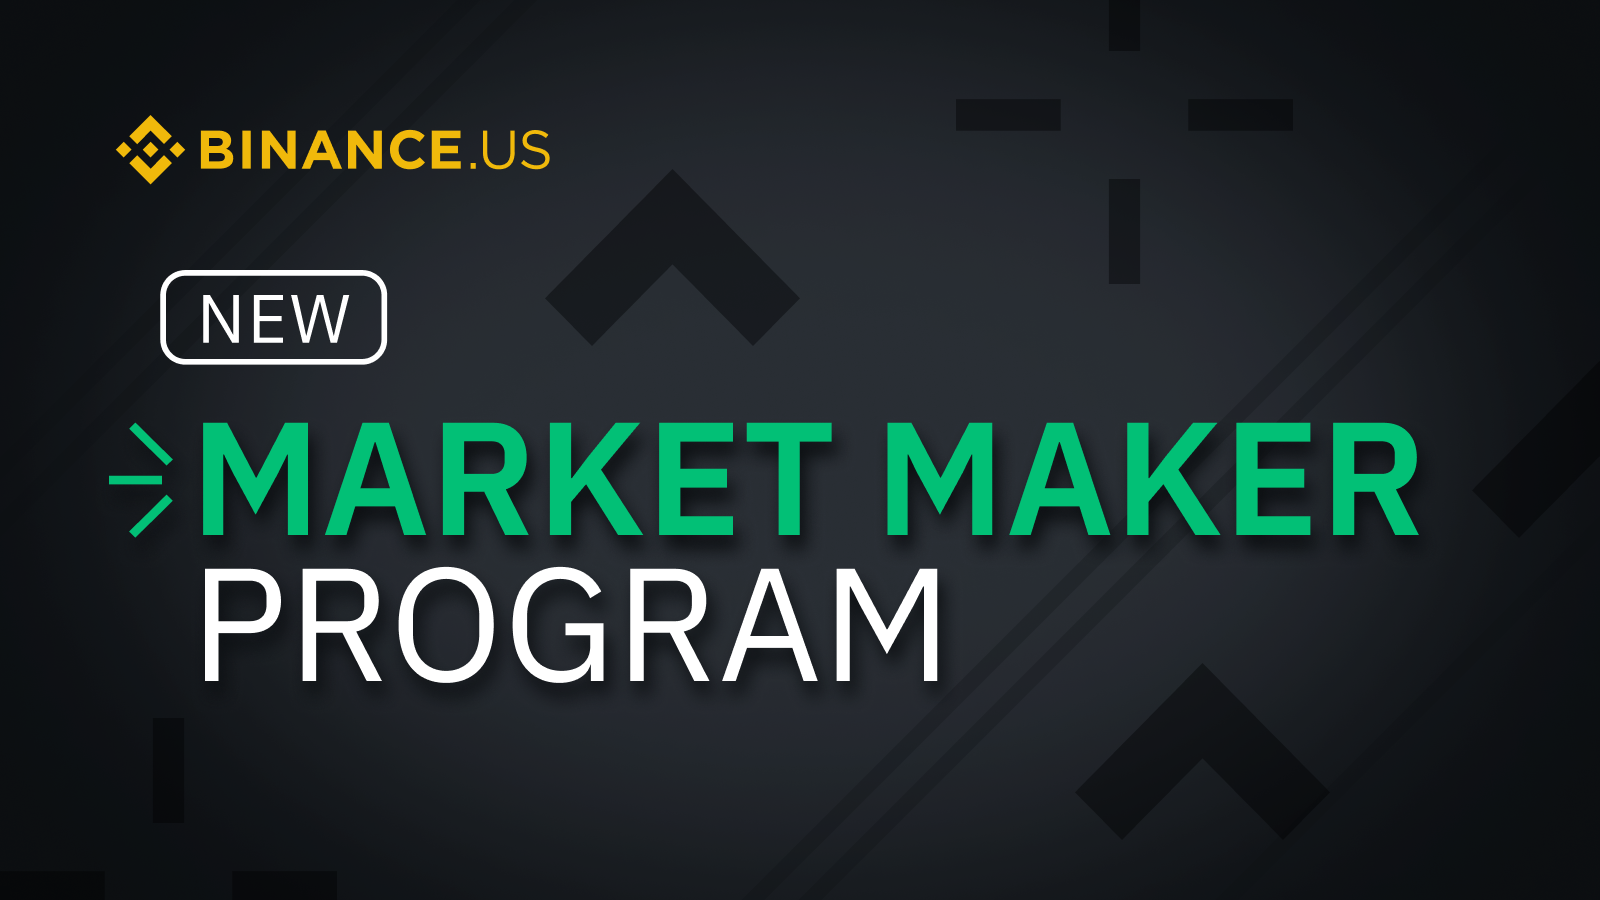 binance-us-launches-market-maker-program-with-rebates